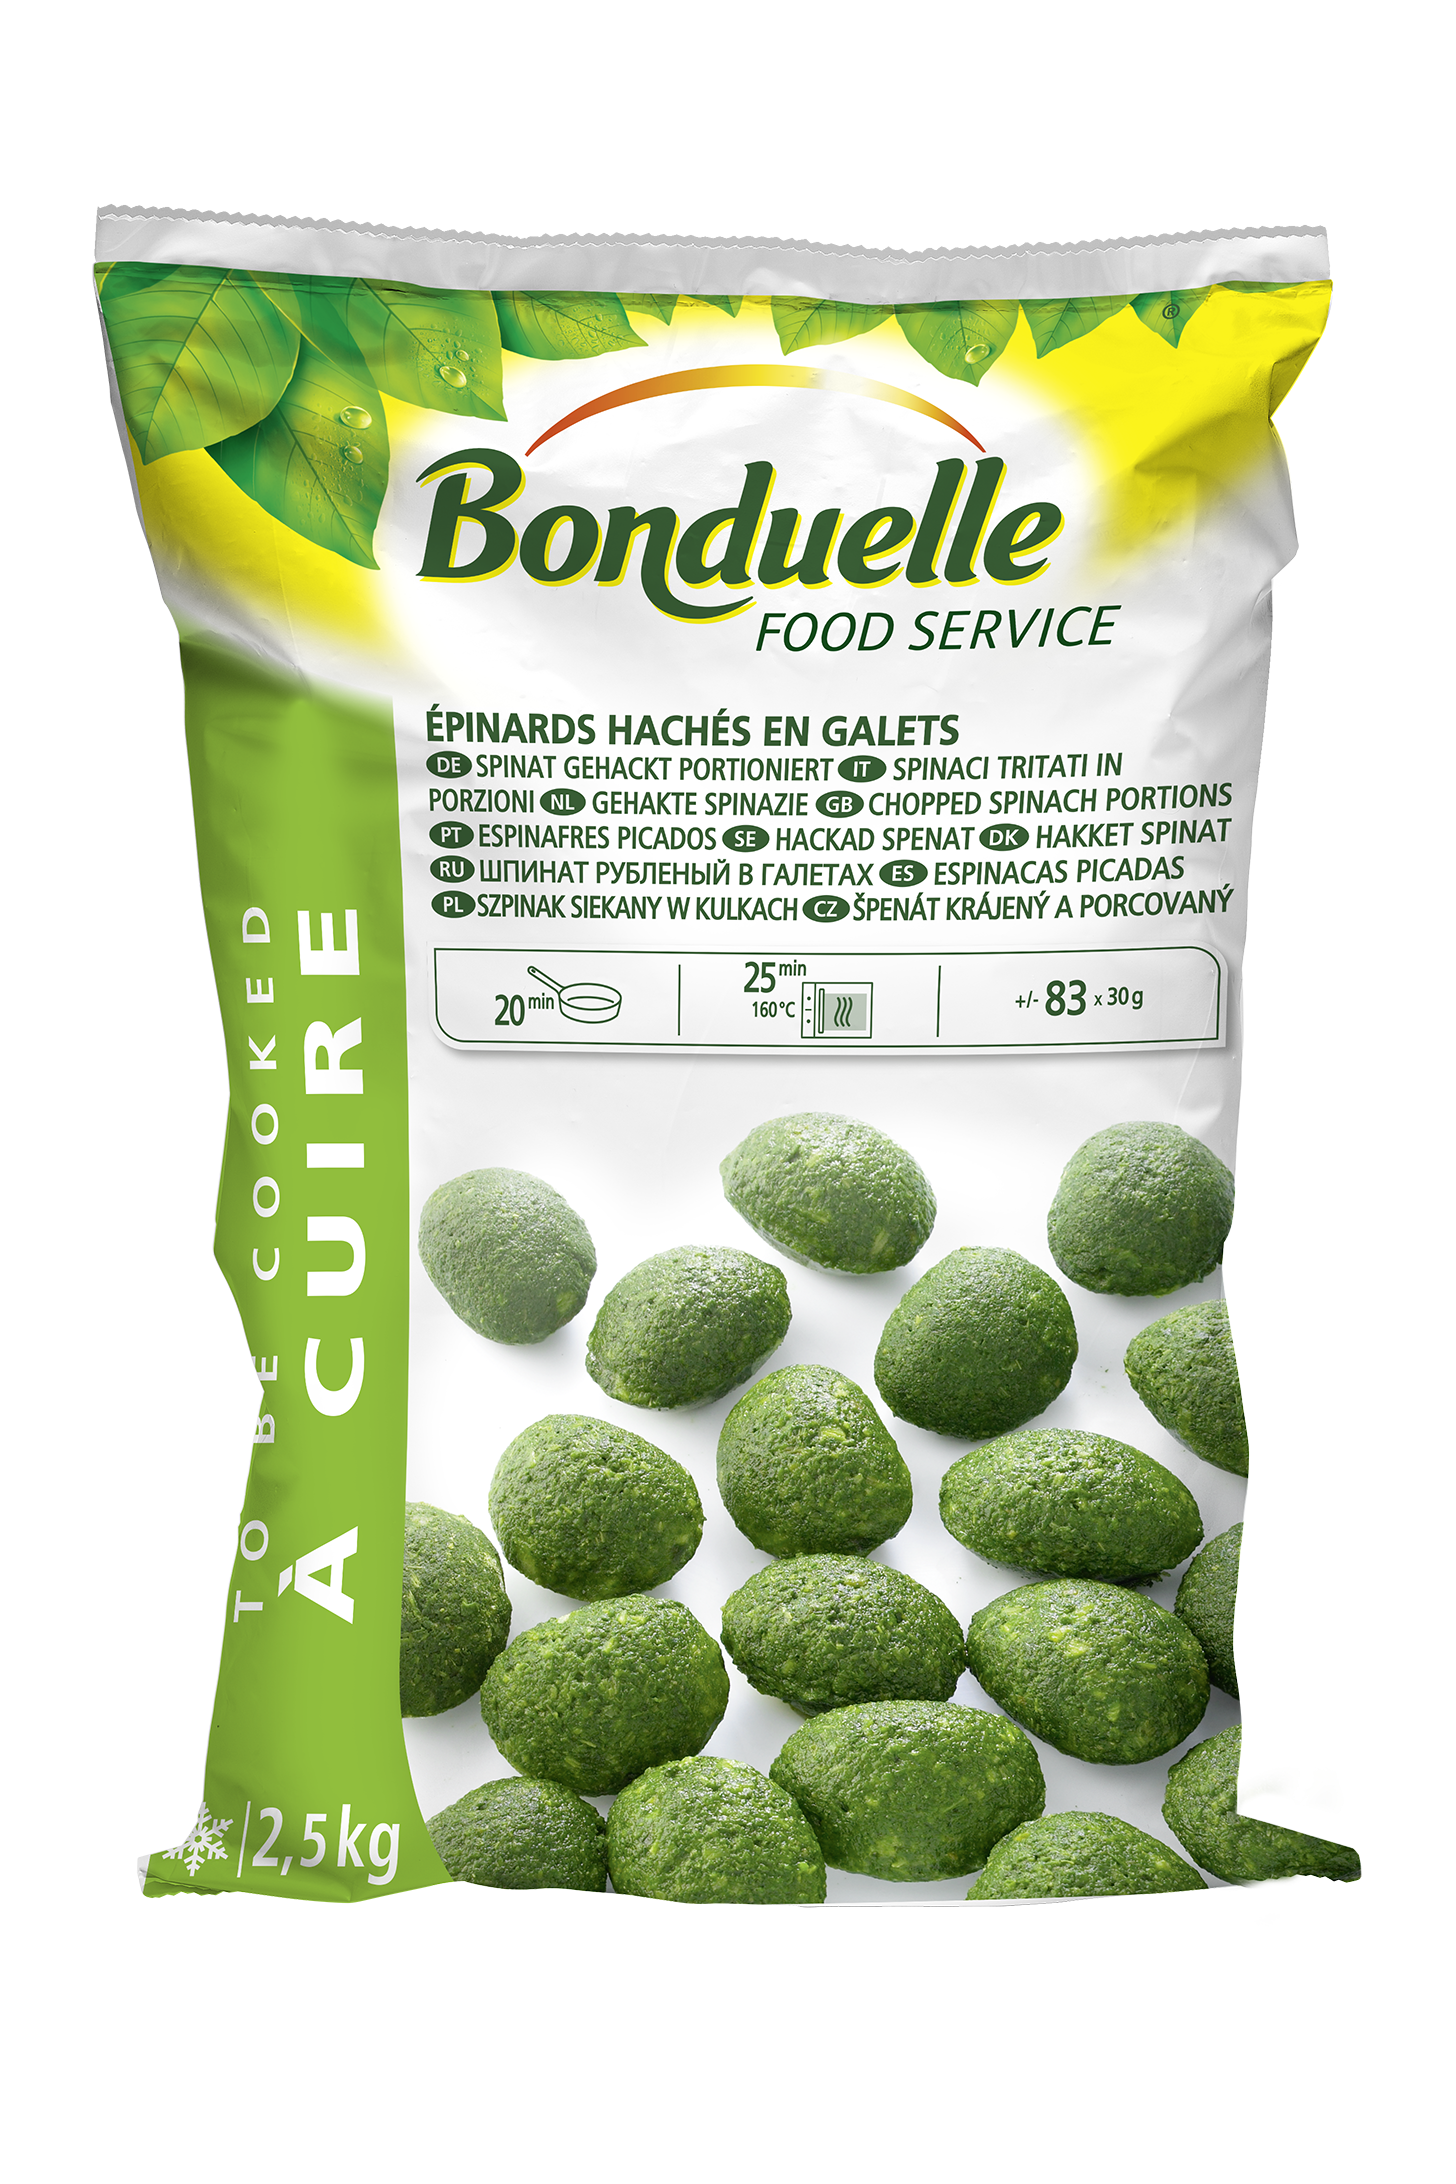 Frozen Chopped Spinach portions 2.5kg IQF Bonduelle Food Service